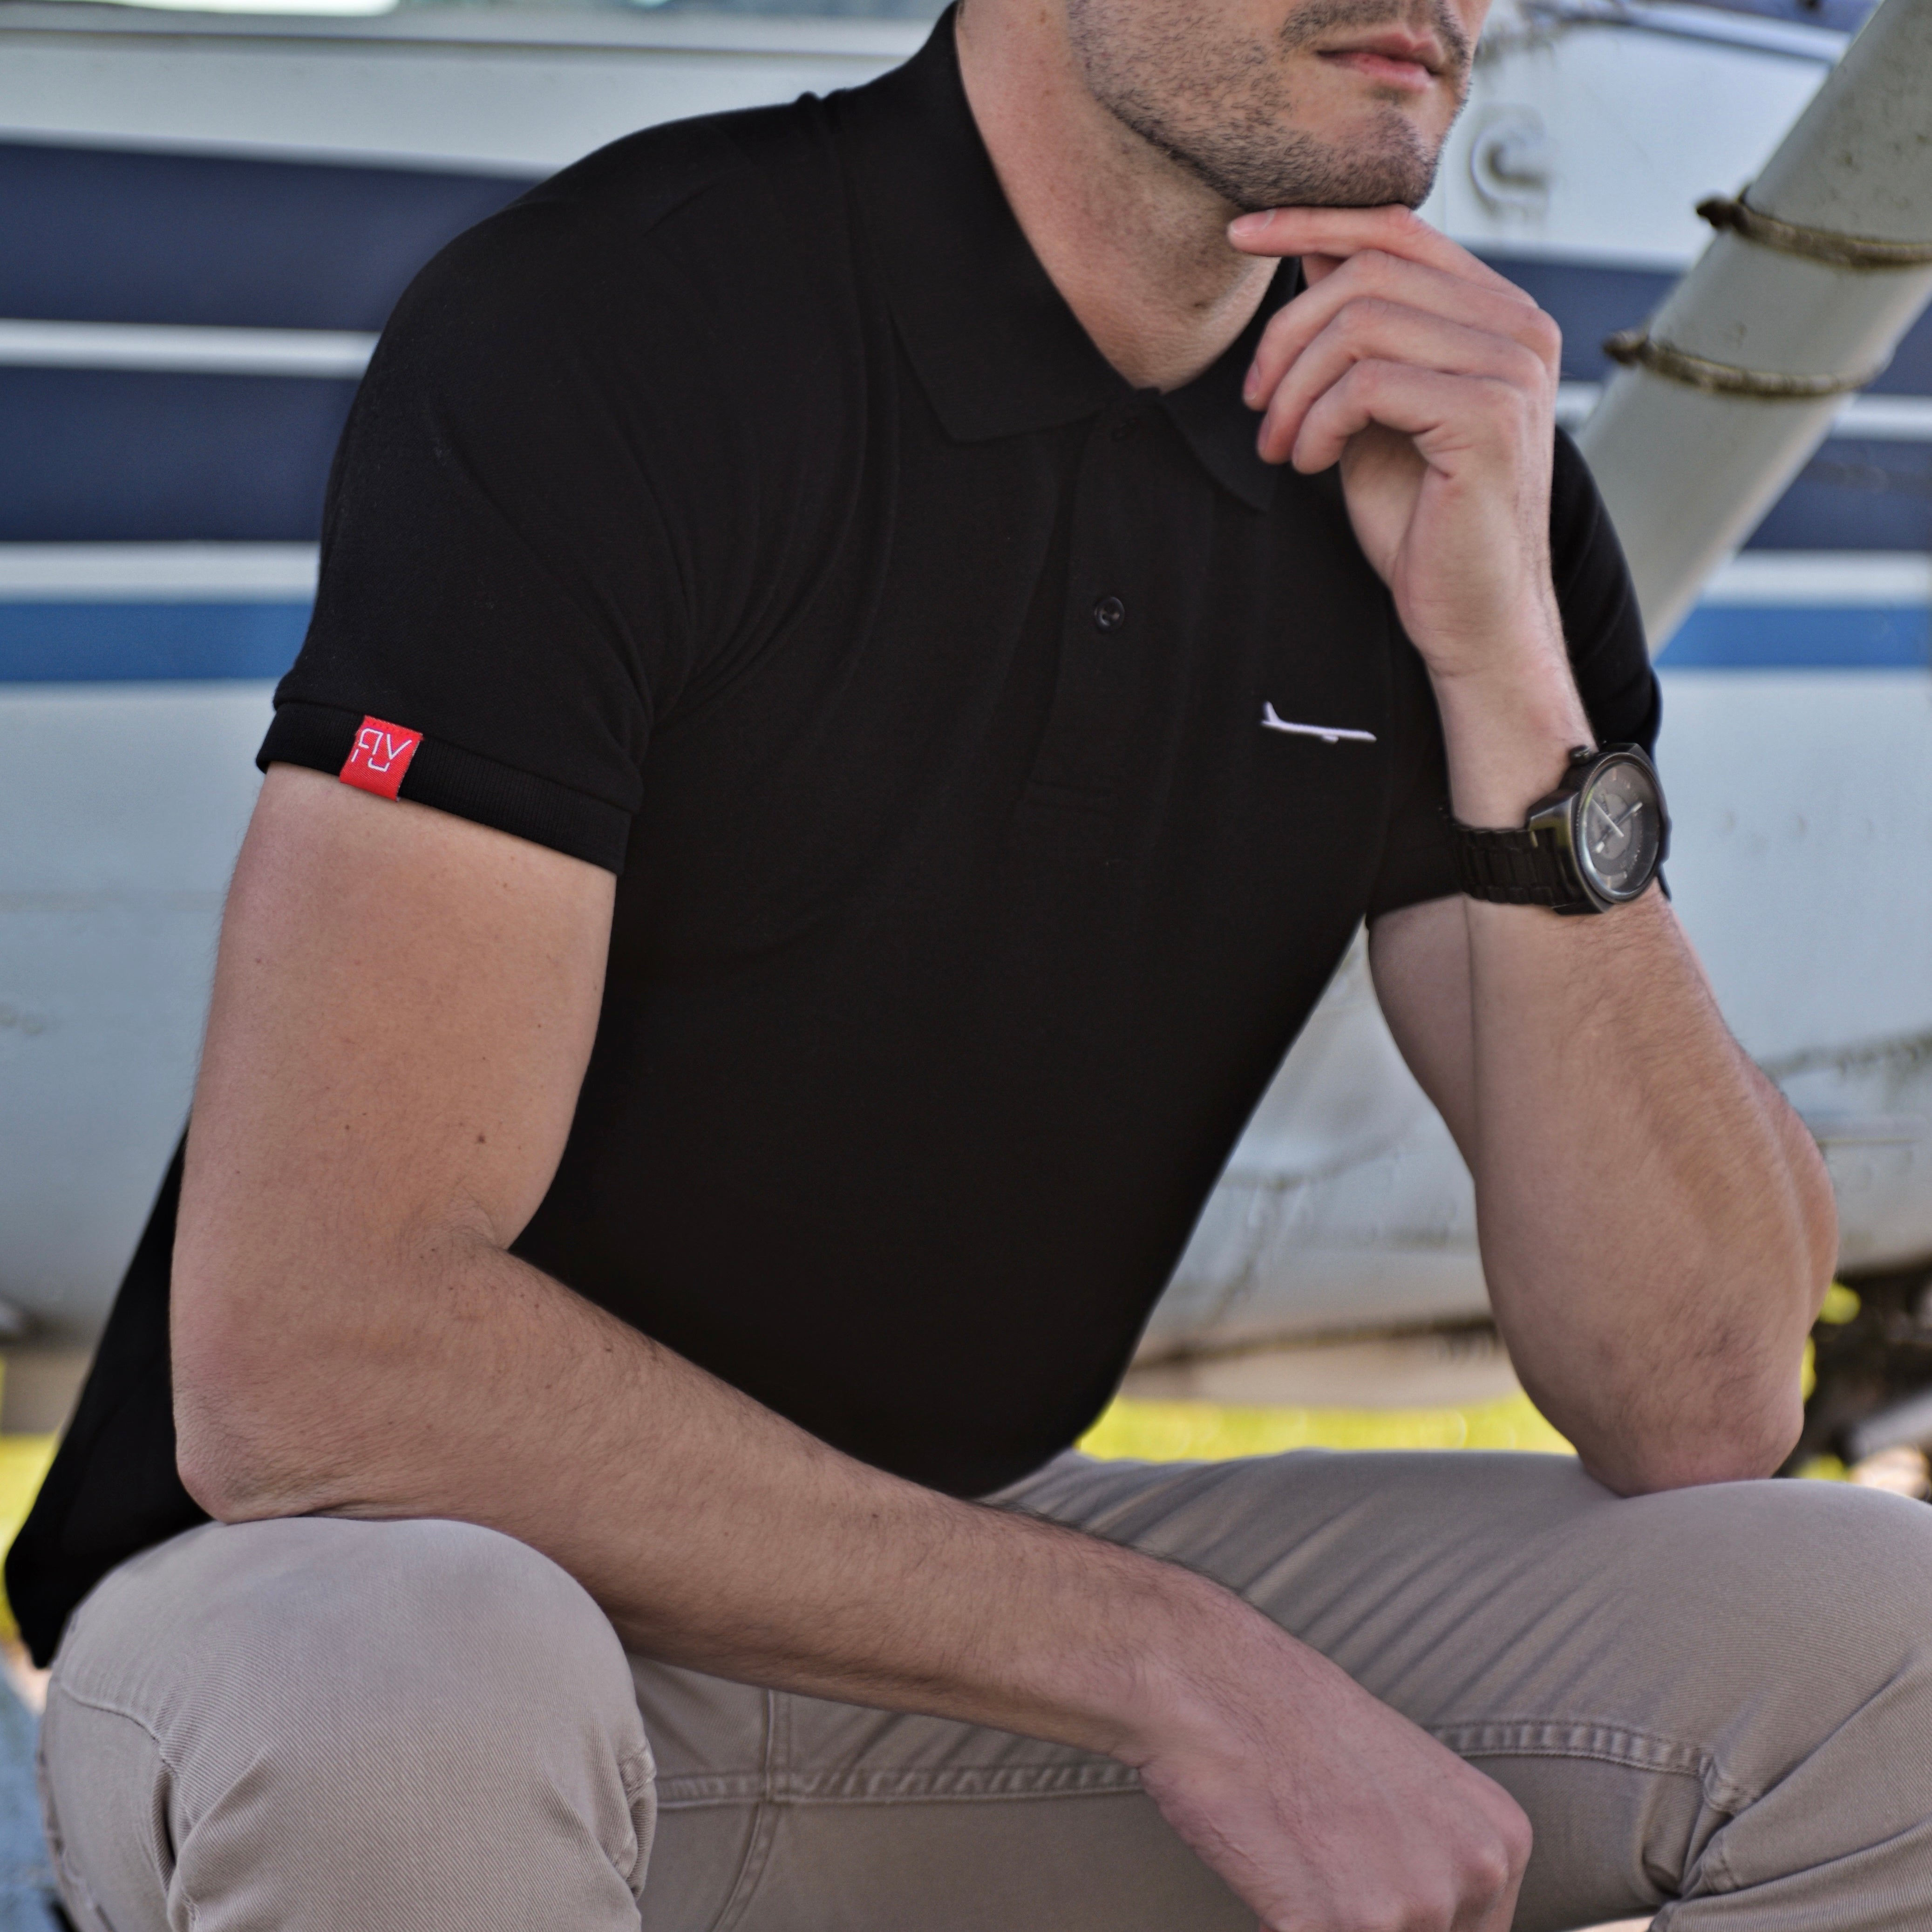 Aviation Polo Shirt